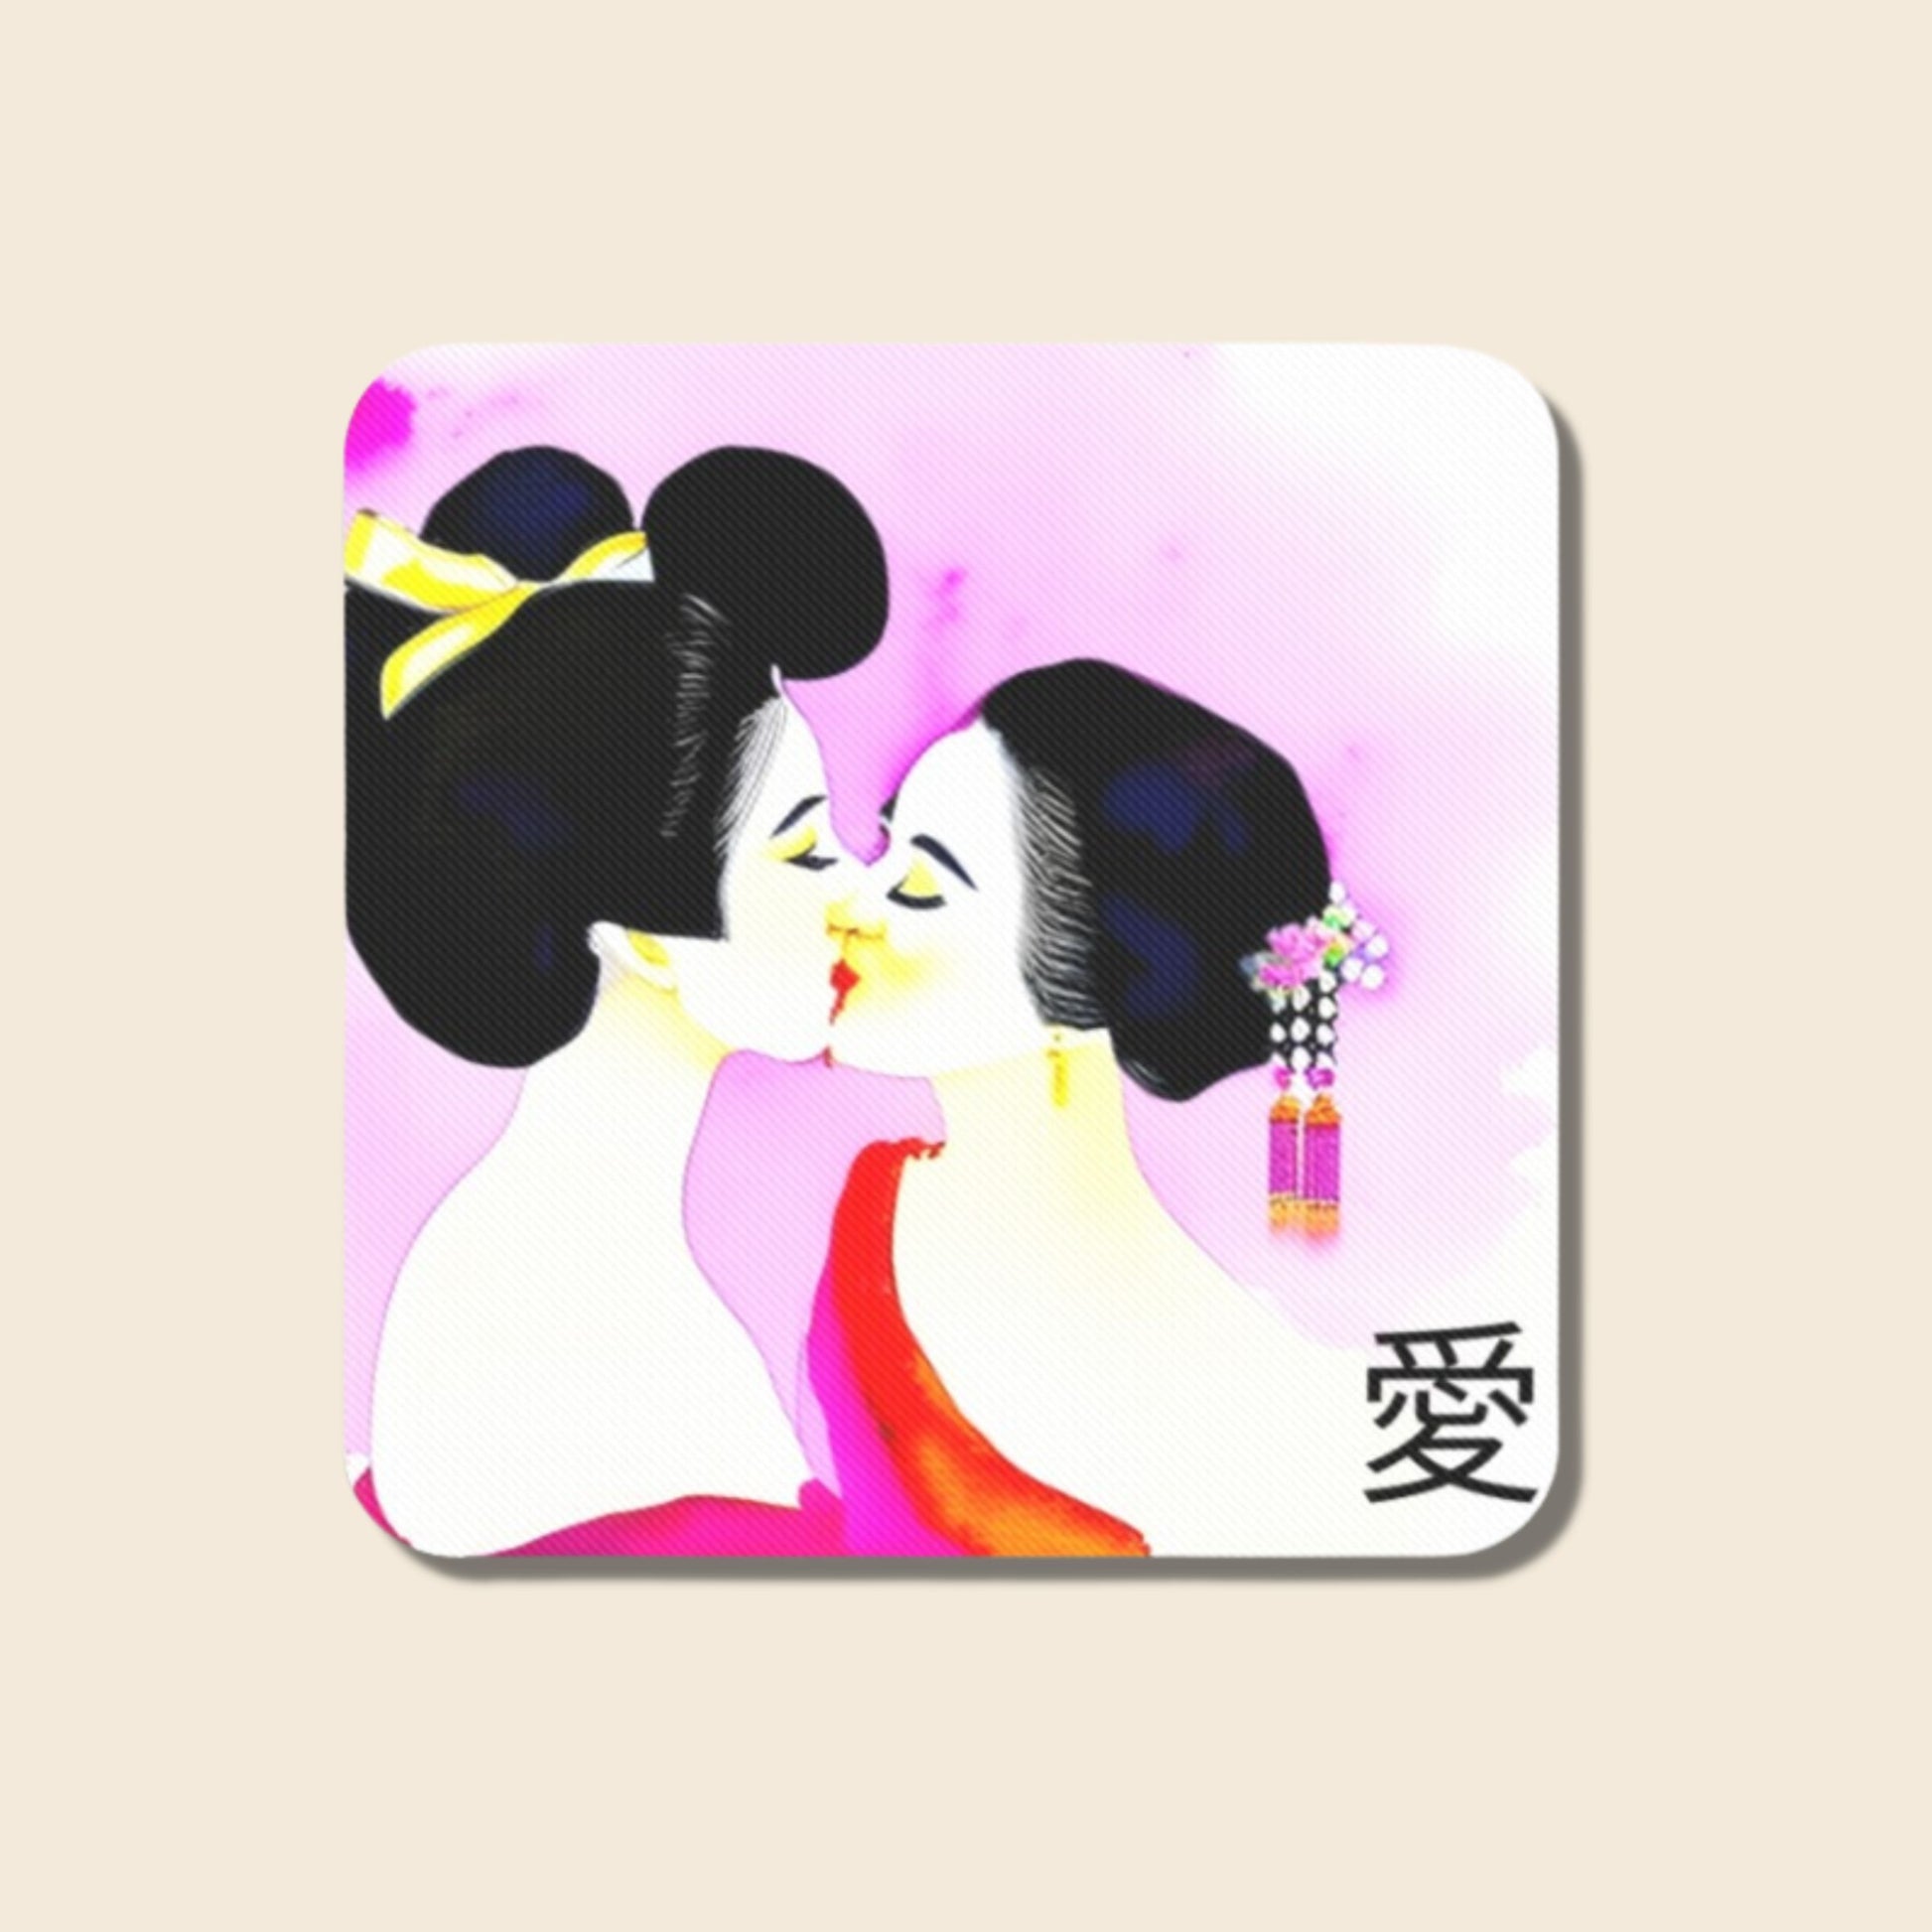 Geishas In Love Coasters option 3